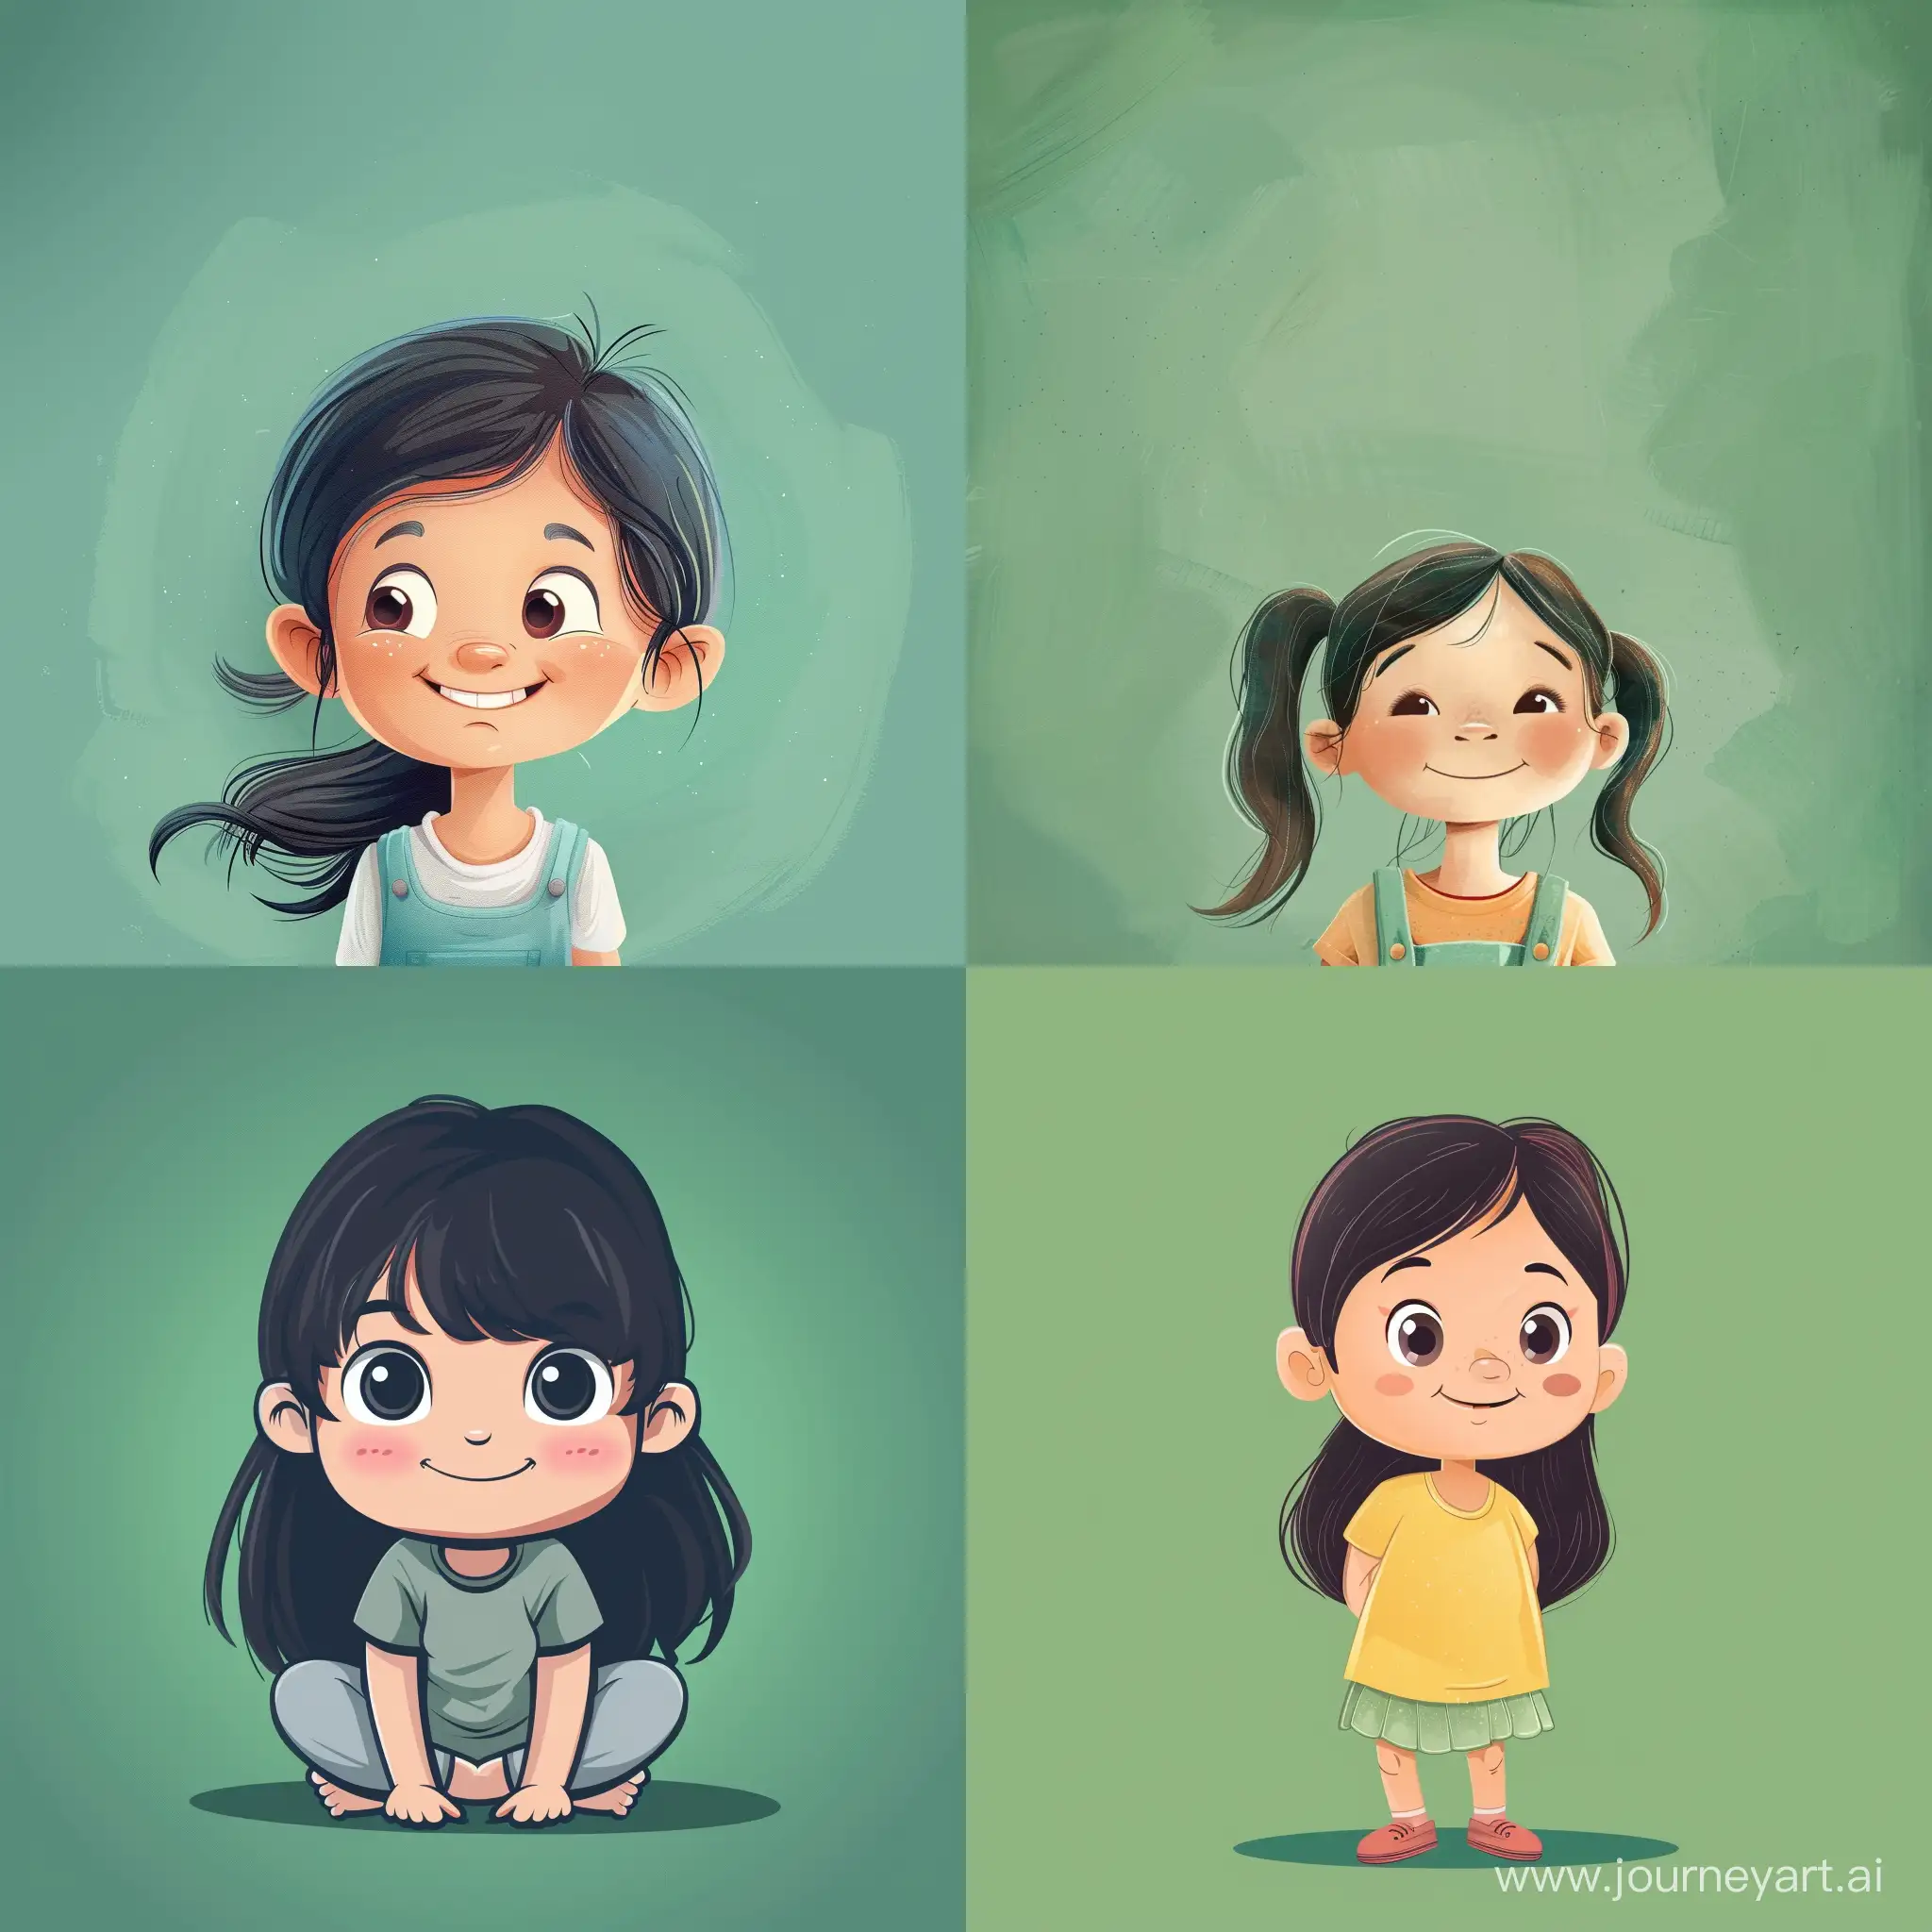 Cheerful-Little-Girl-in-Simple-Green-Background-Adobe-Illustrator-Artwork